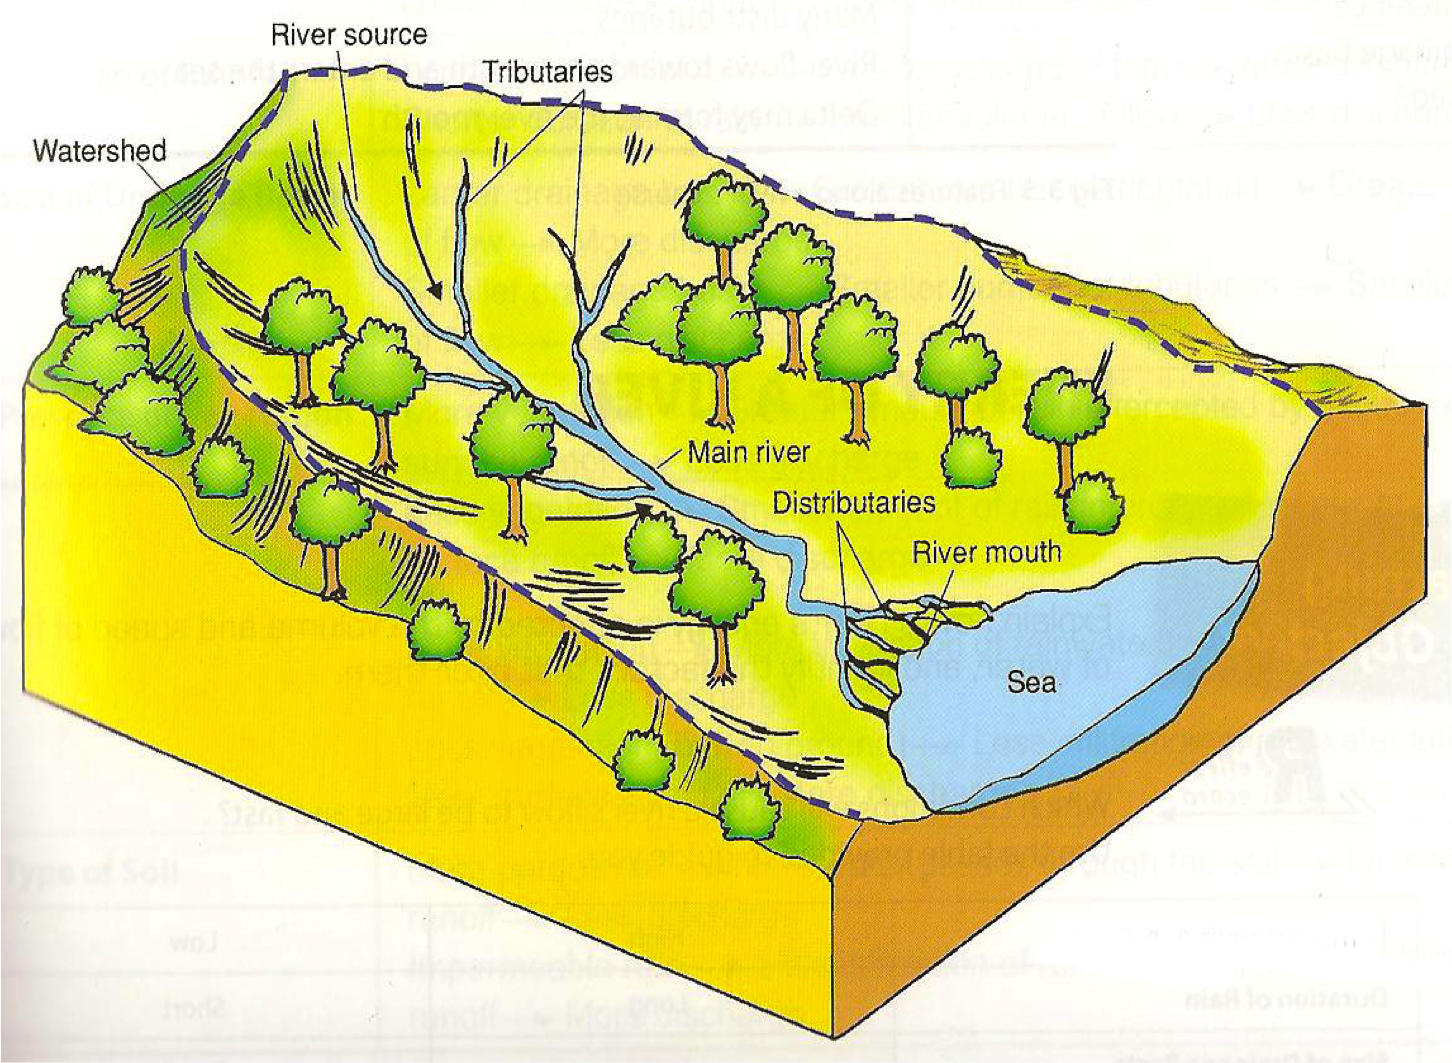 [DIAGRAM] Drainage Basin Divide Water Flow Diagram - MYDIAGRAM.ONLINE